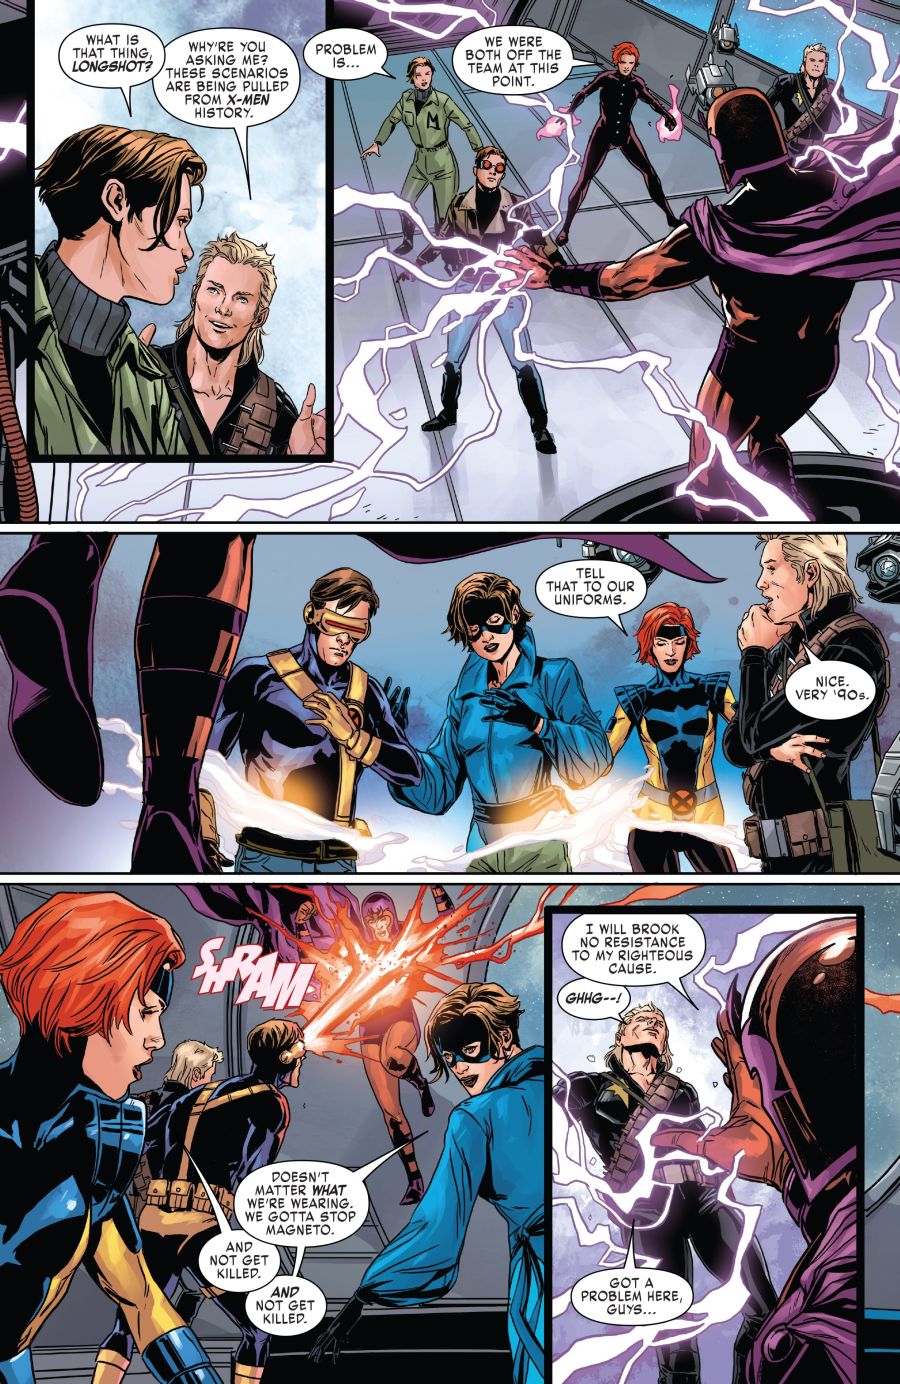 X-Men Gold #14